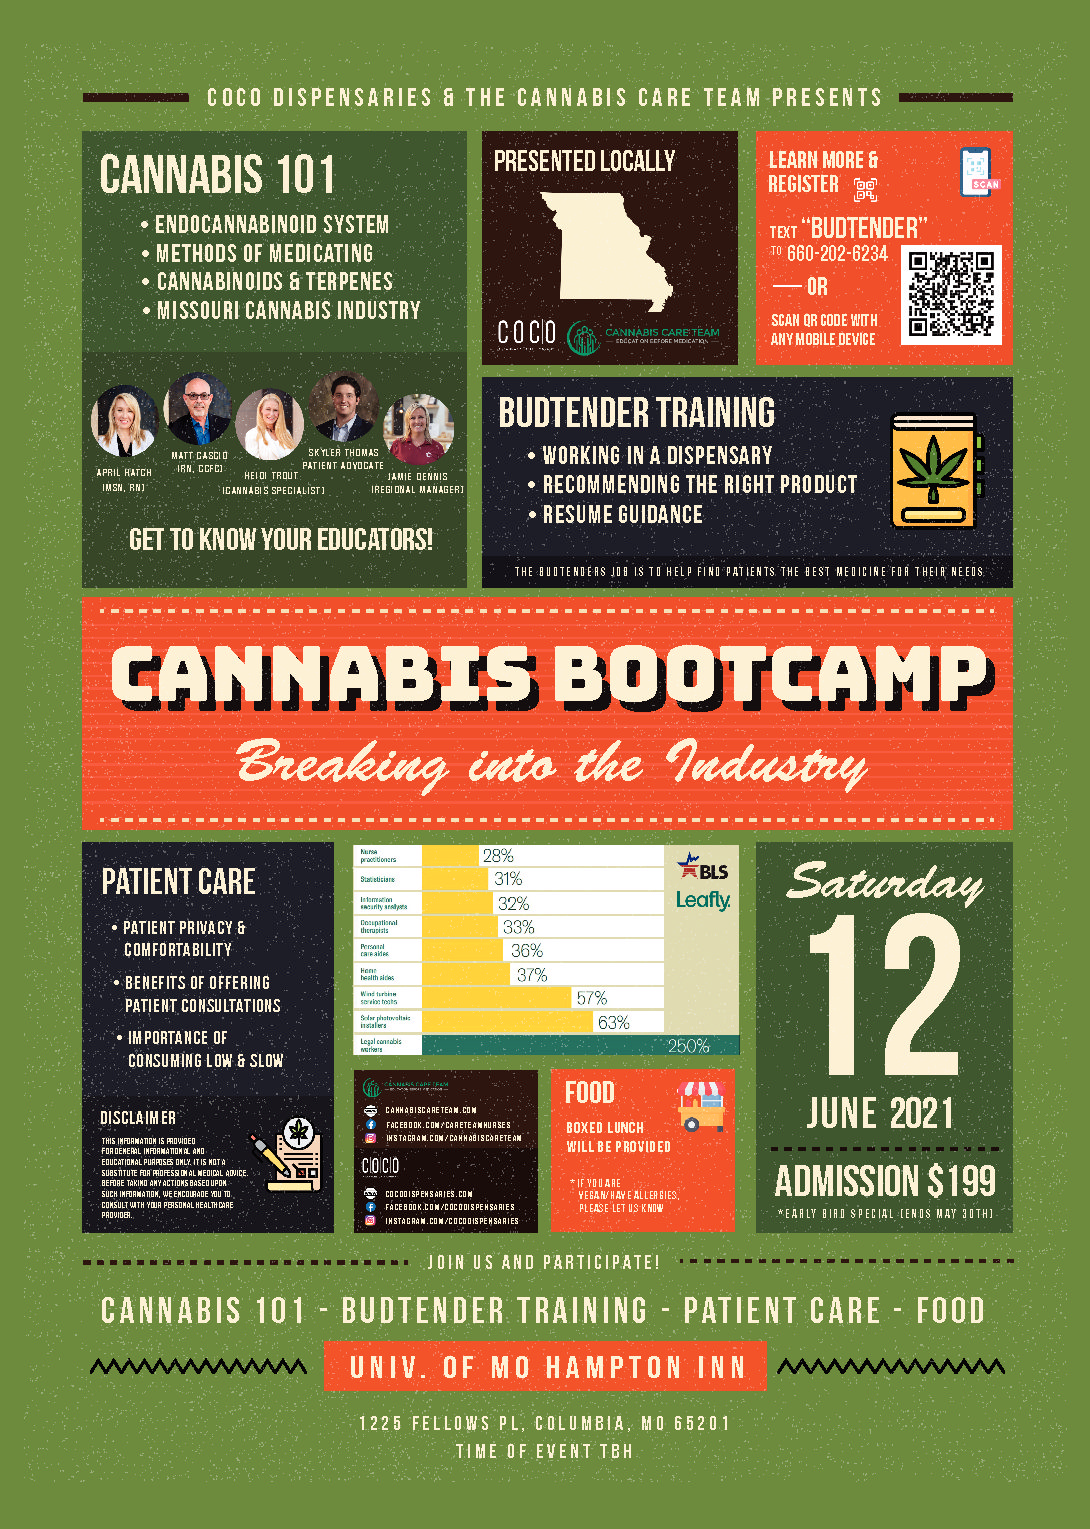 Cannabis Care Team and COCO Dispensaries present Cannabis Bootcamp